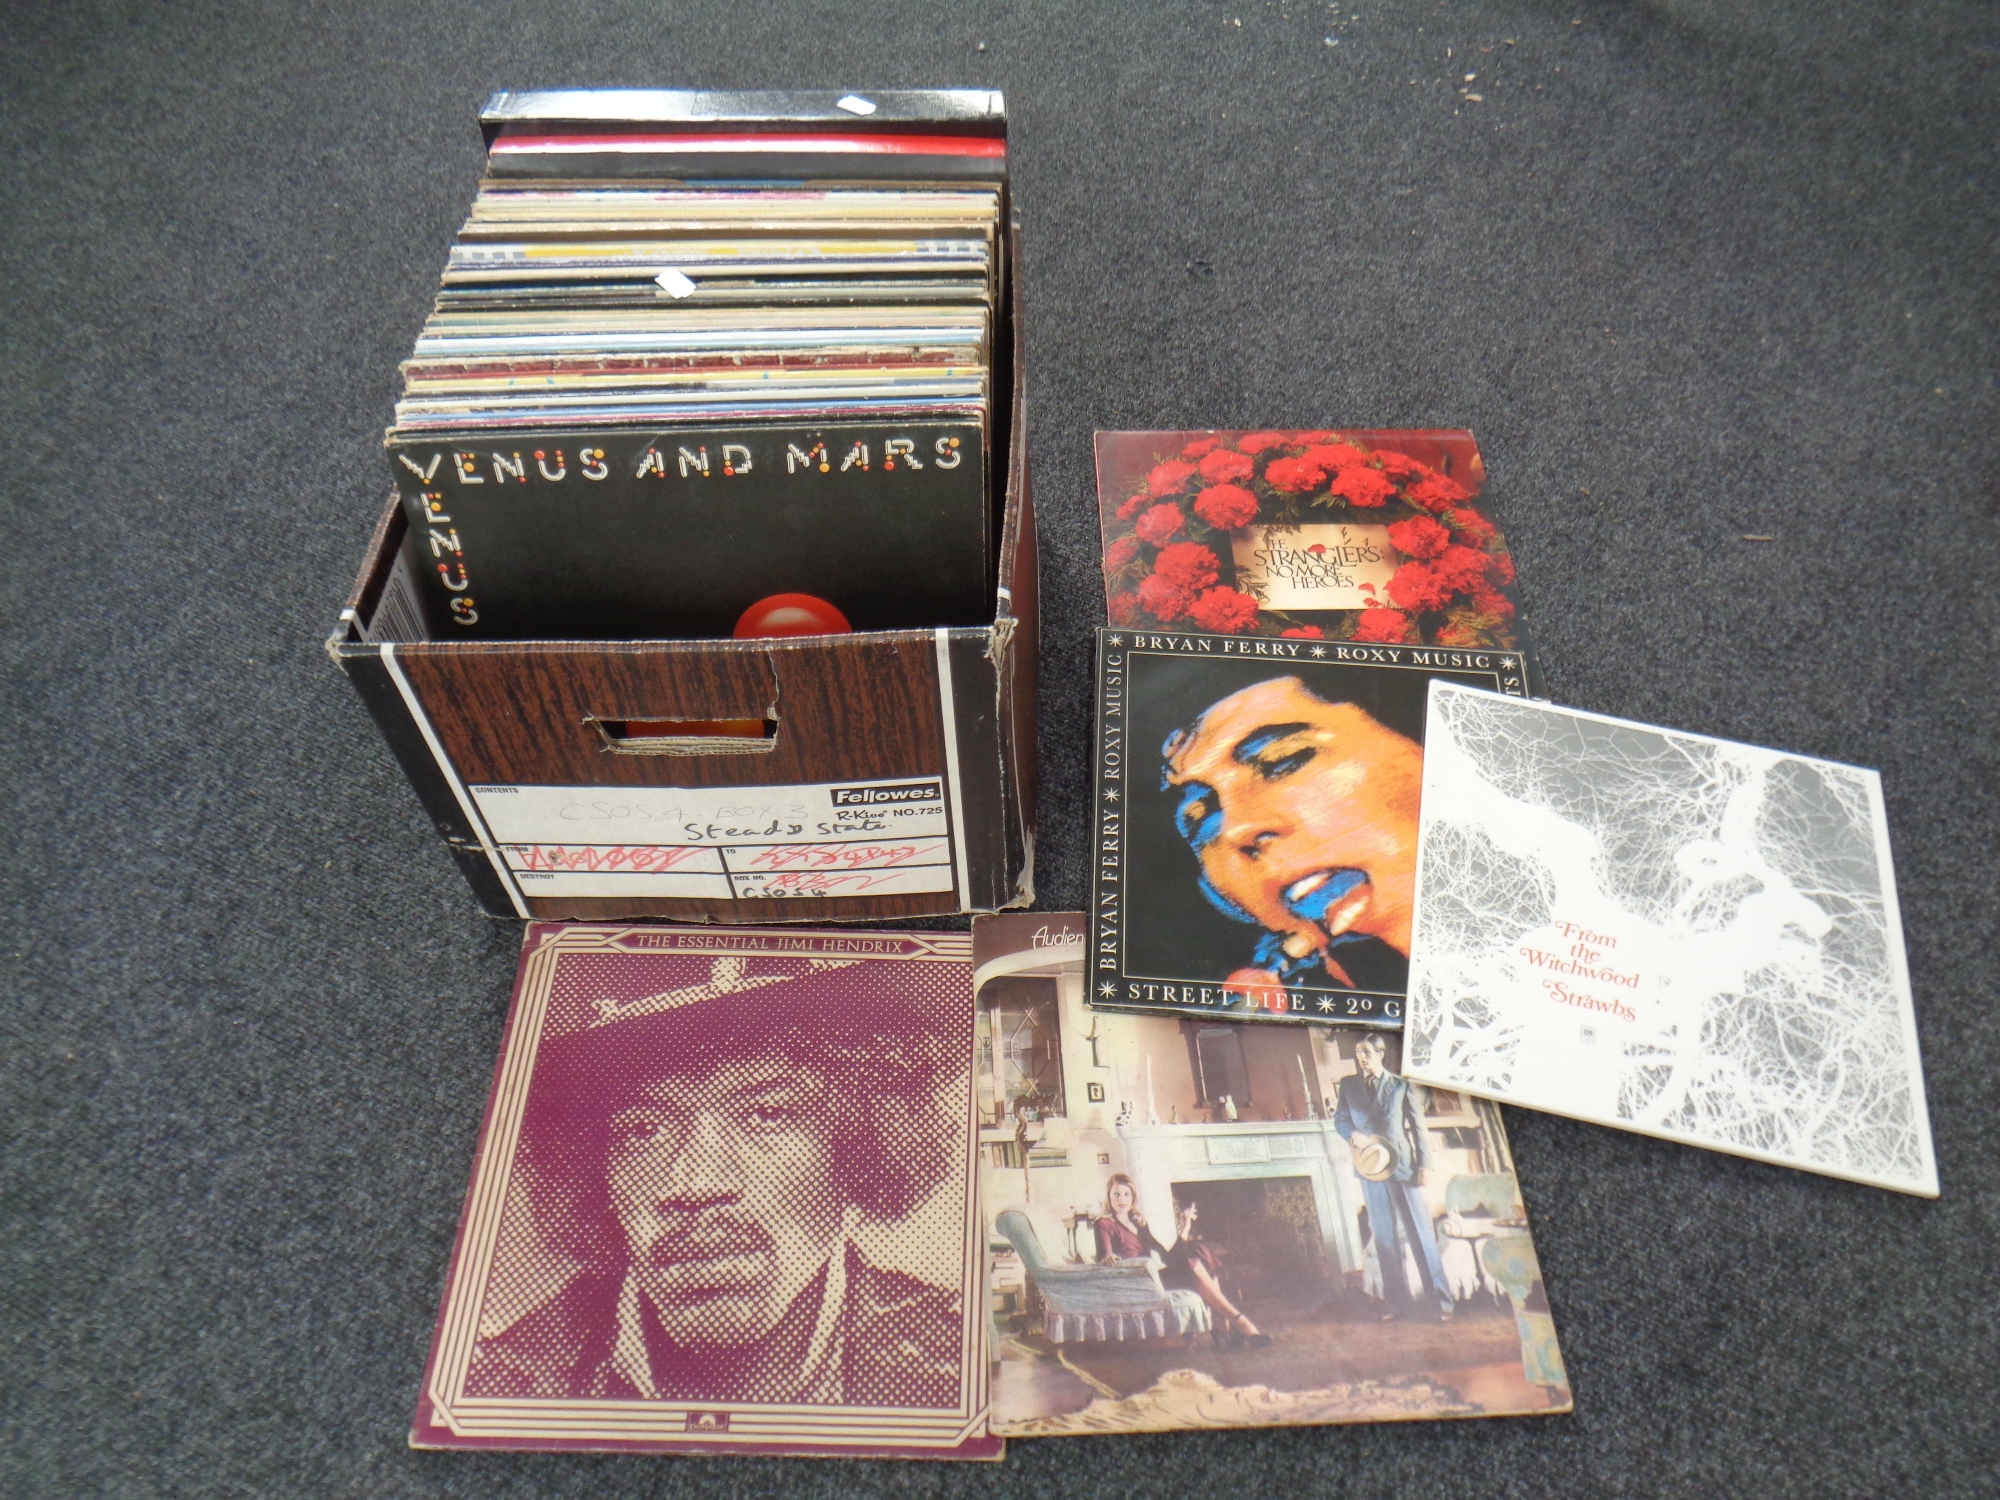 A box of vinyl records, 10 CC, Brian Ferry, Compilations,